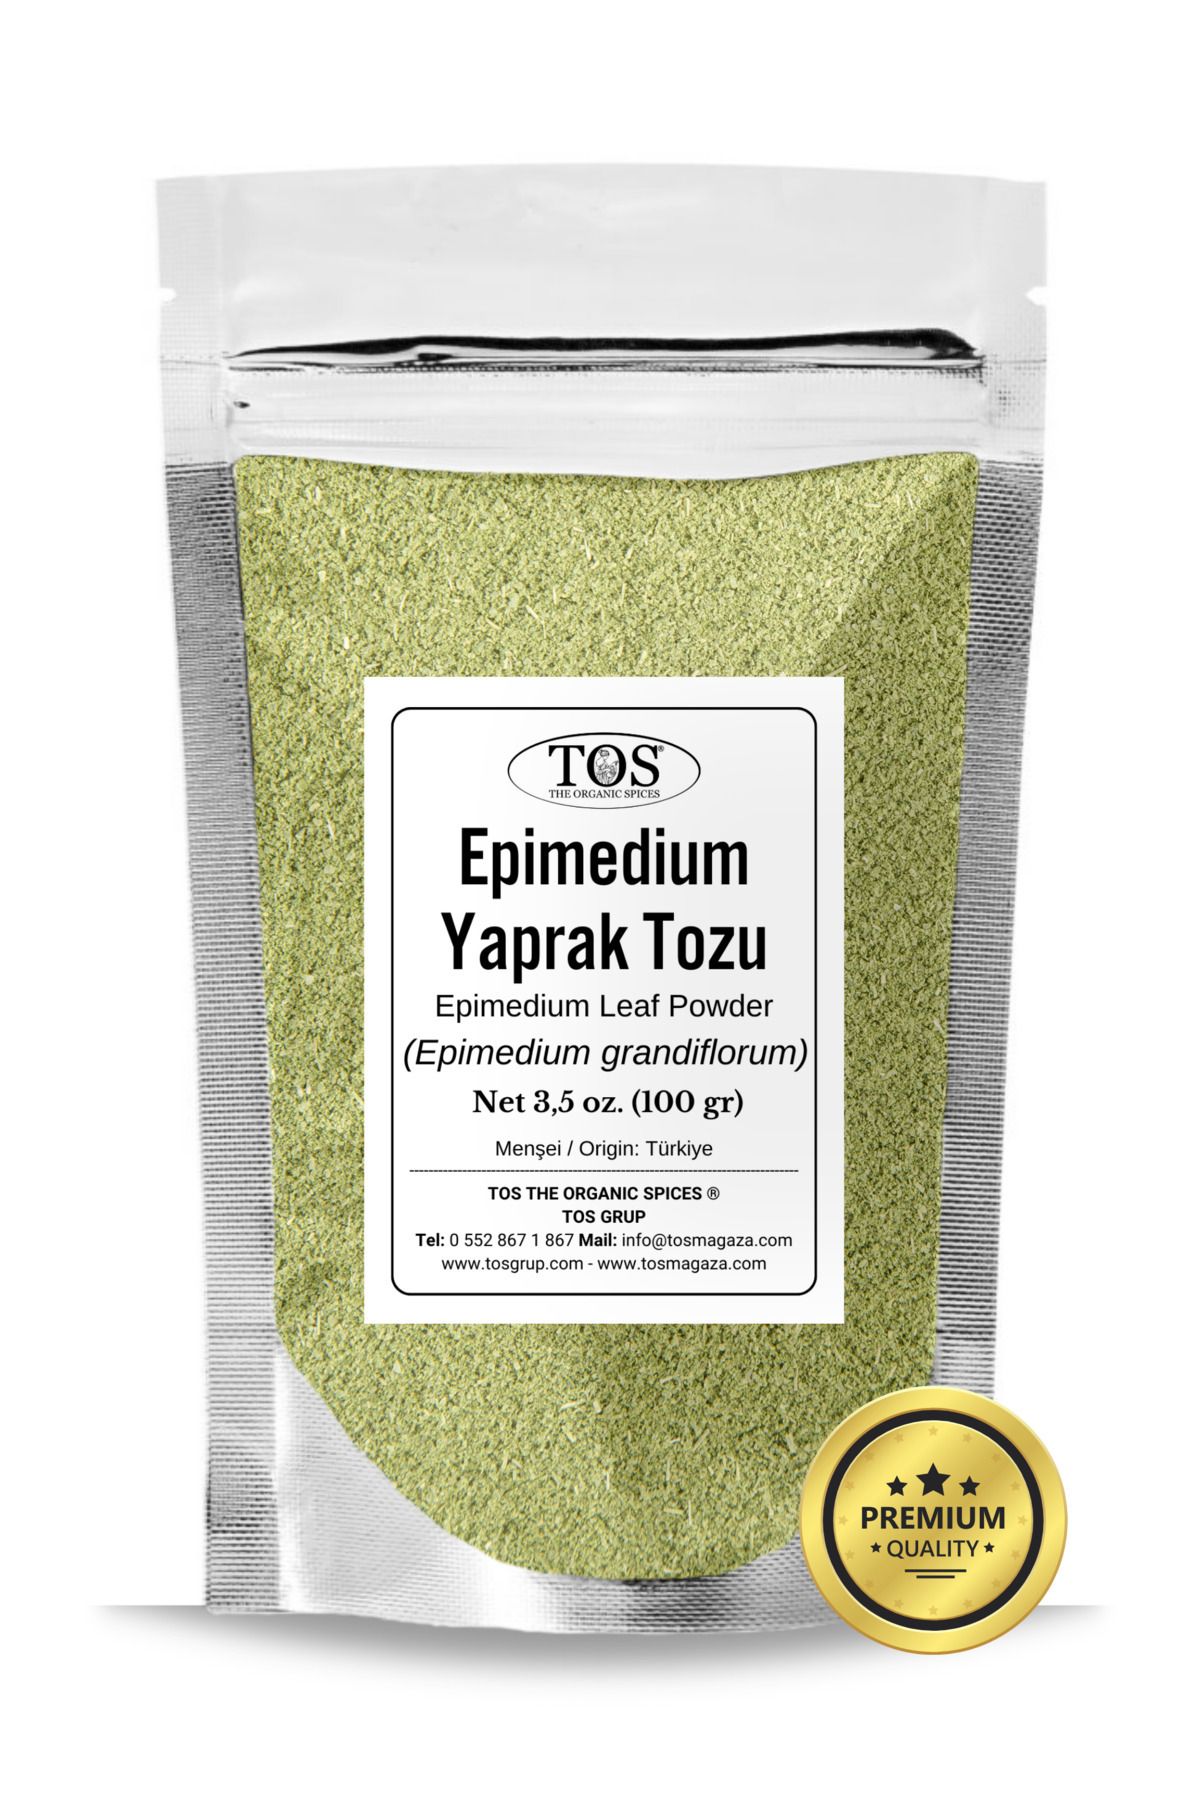 TOS The Organic Spices Epimedium Yaprak Tozu 100 gr (1. Kalite) Epimedium grandiflorum